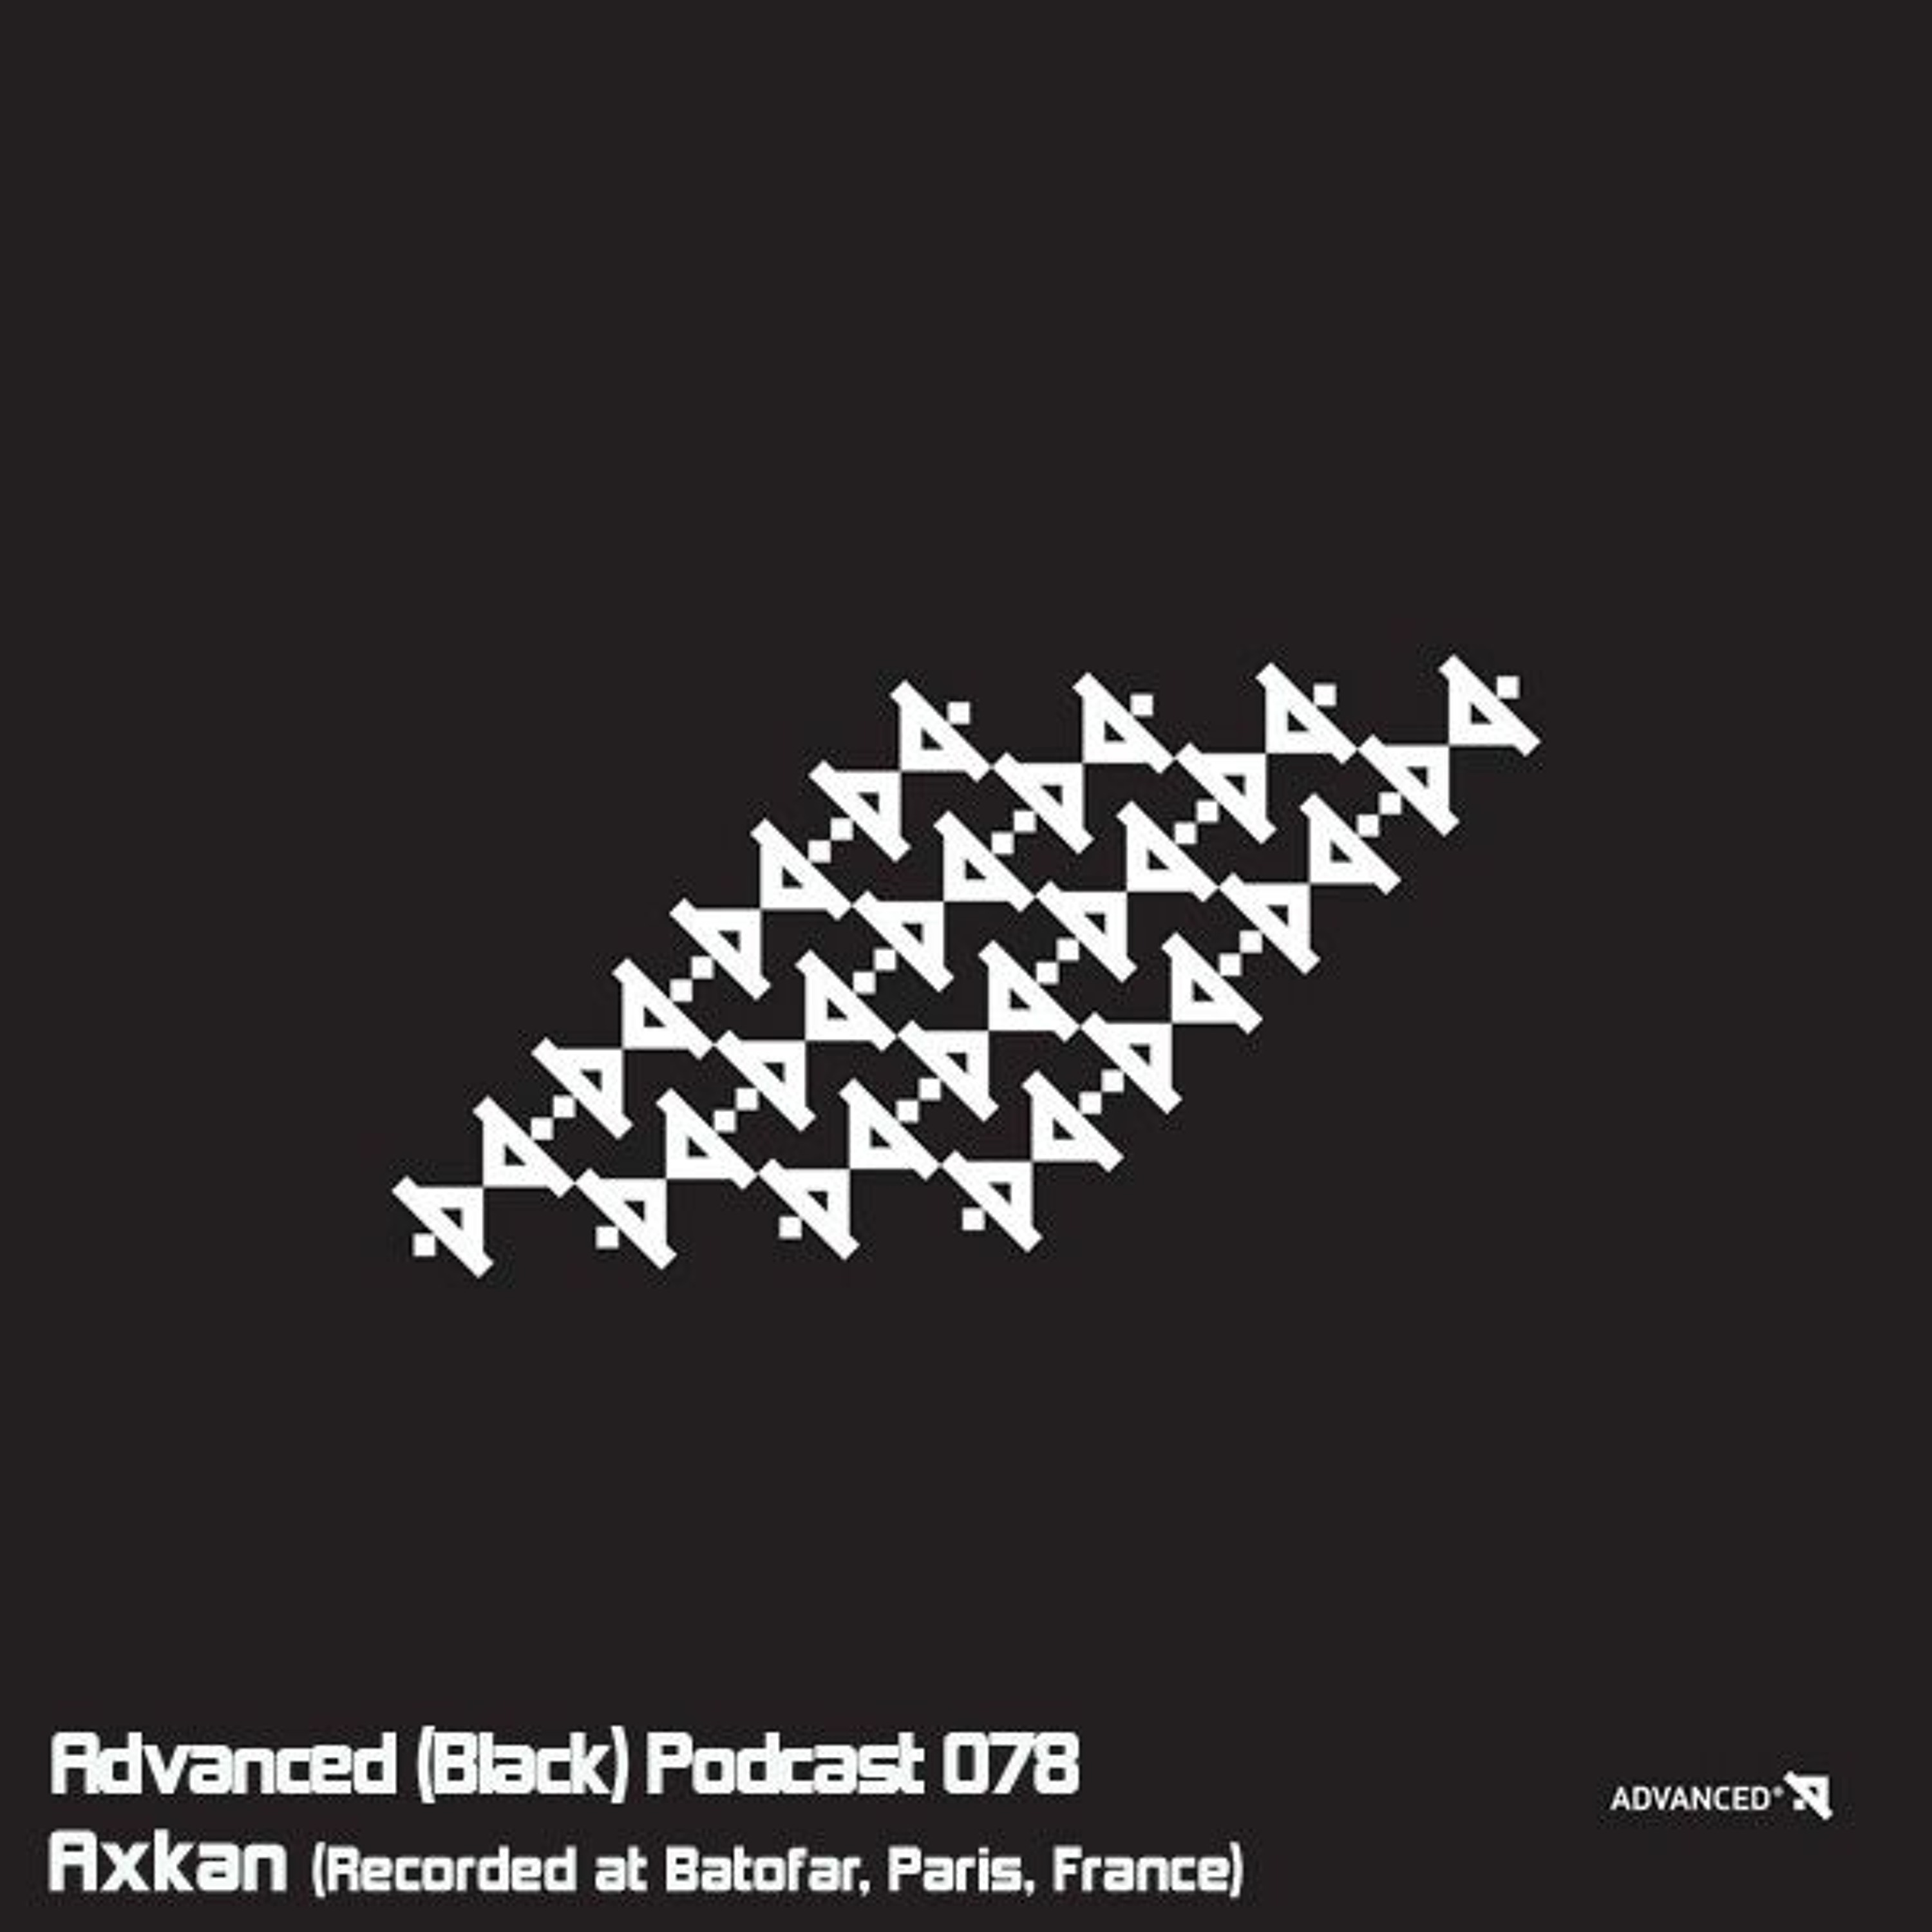 Advanced (Black) Podcast 078 with Axkan (Recorded at Batofar, Paris, France)